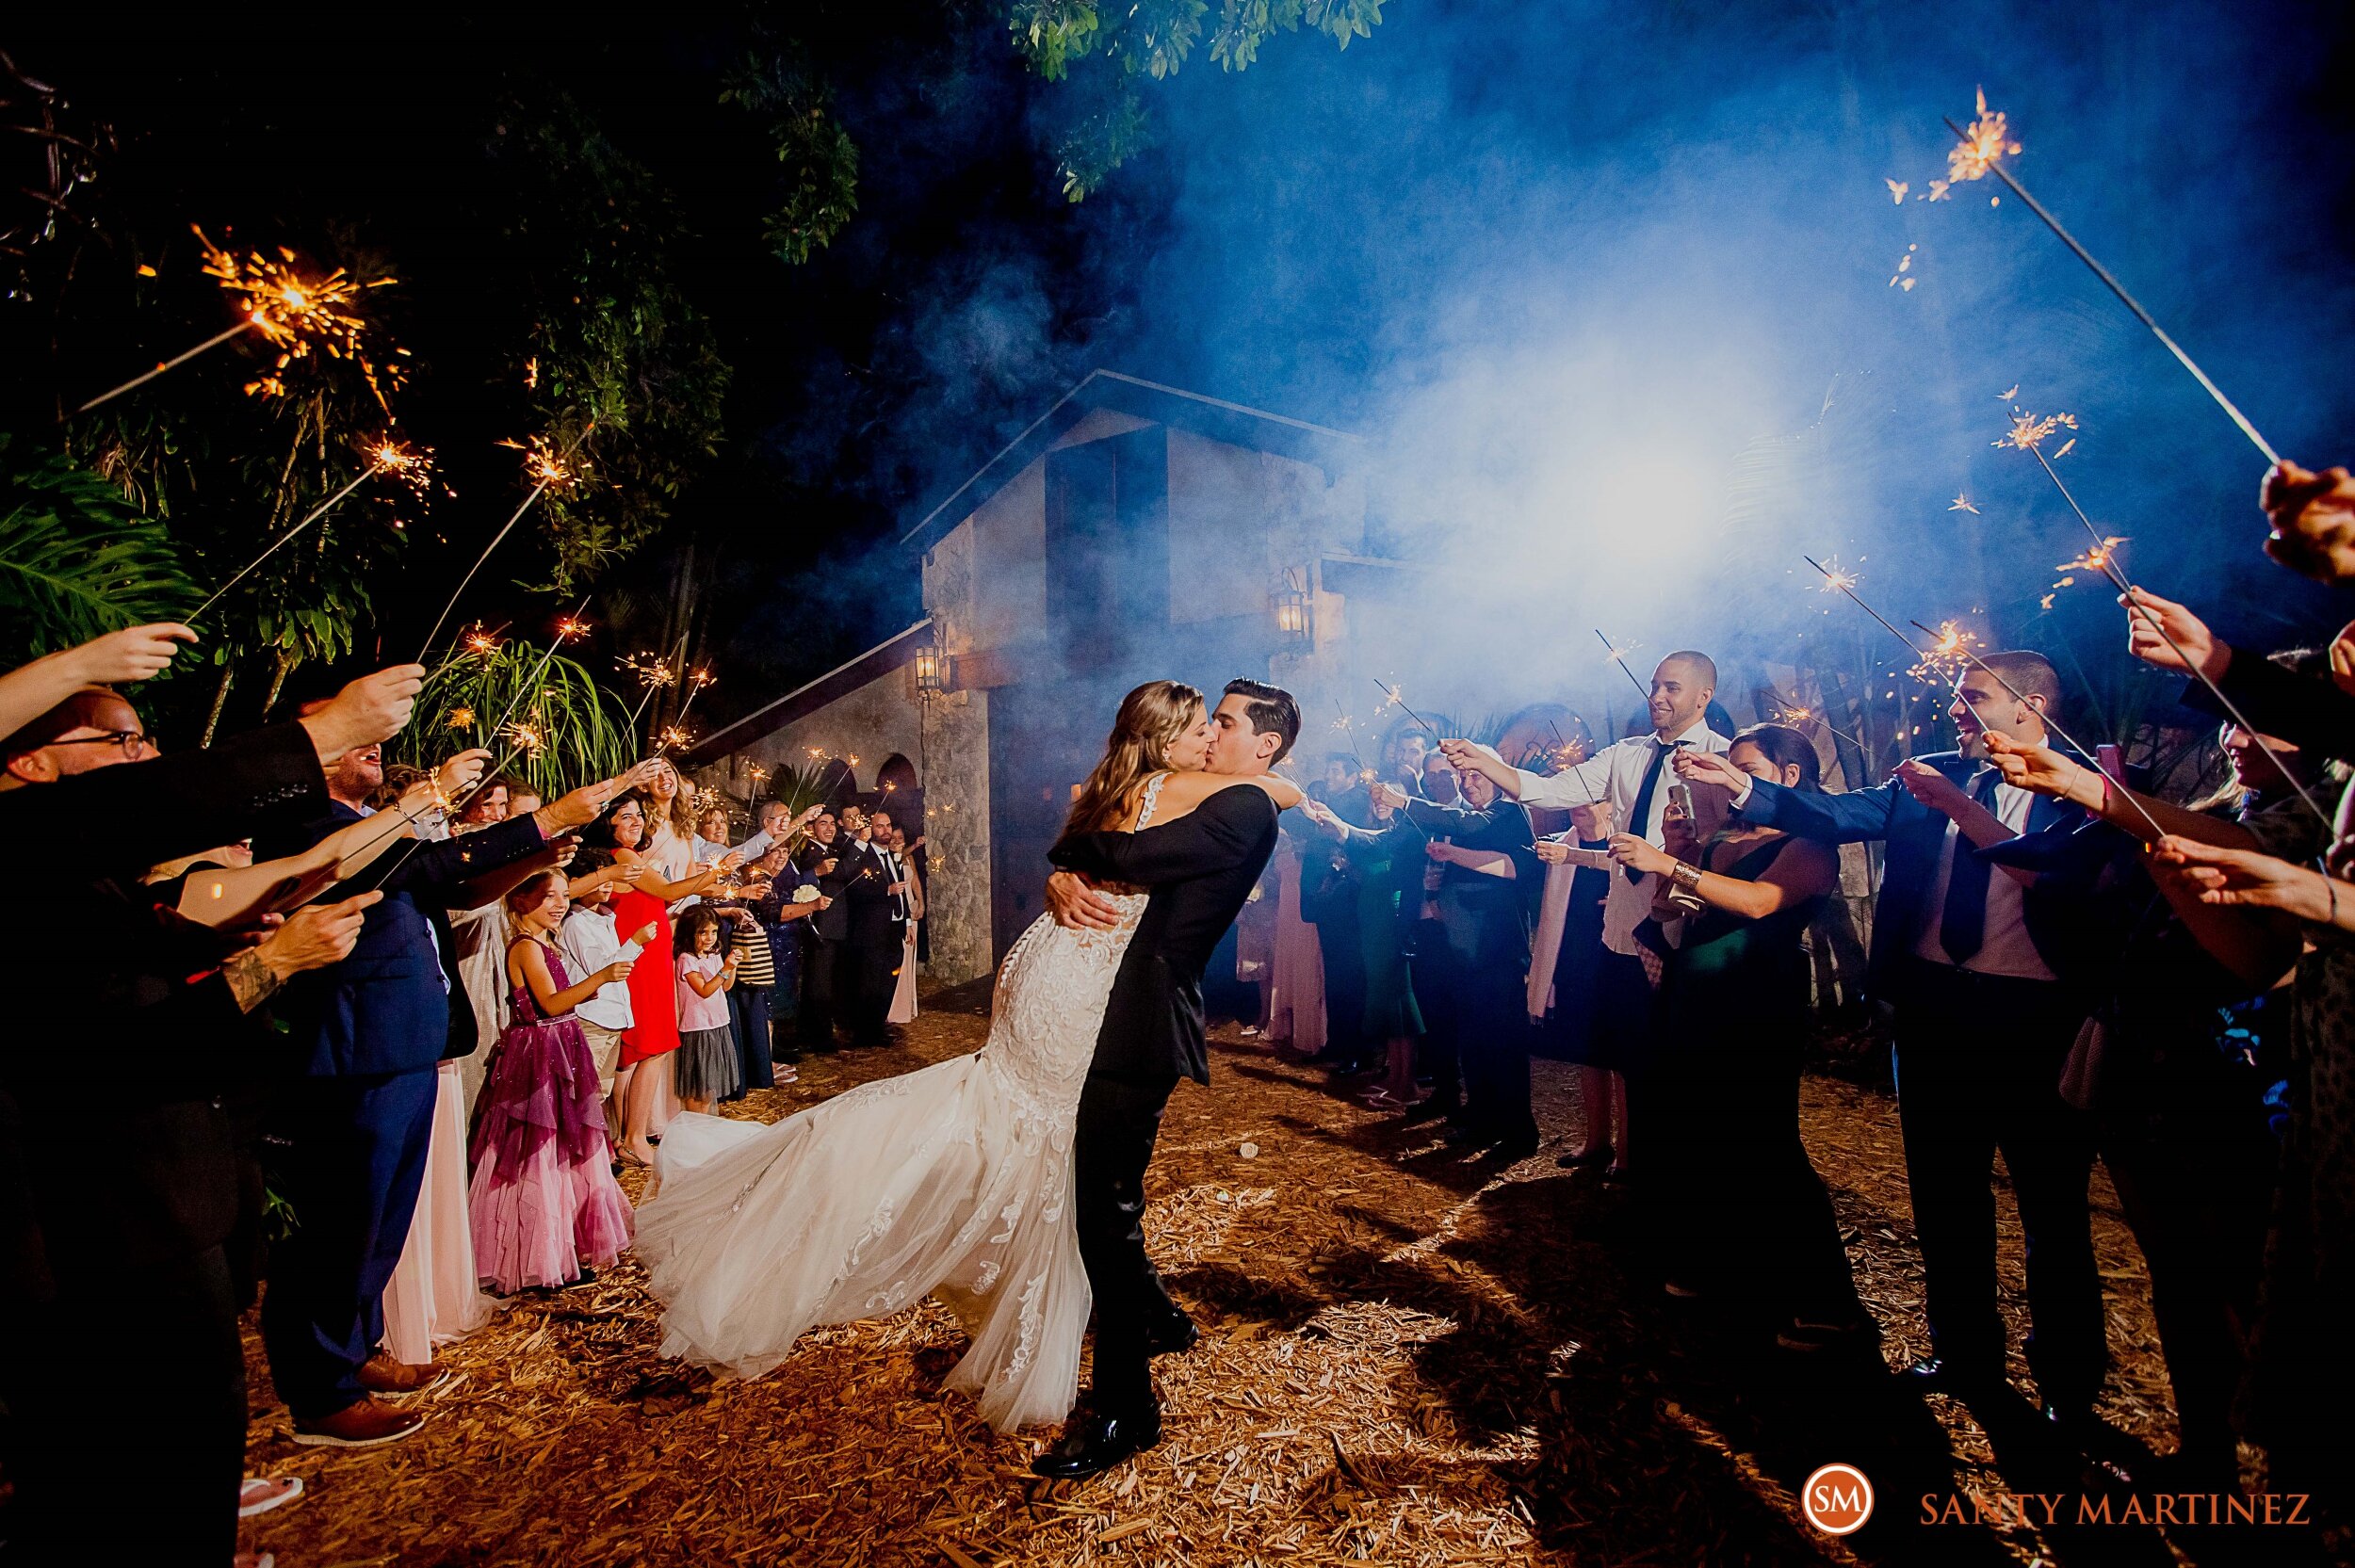 Wedding - The Cooper Estate - Photography by Santy Martinez 36.jpg